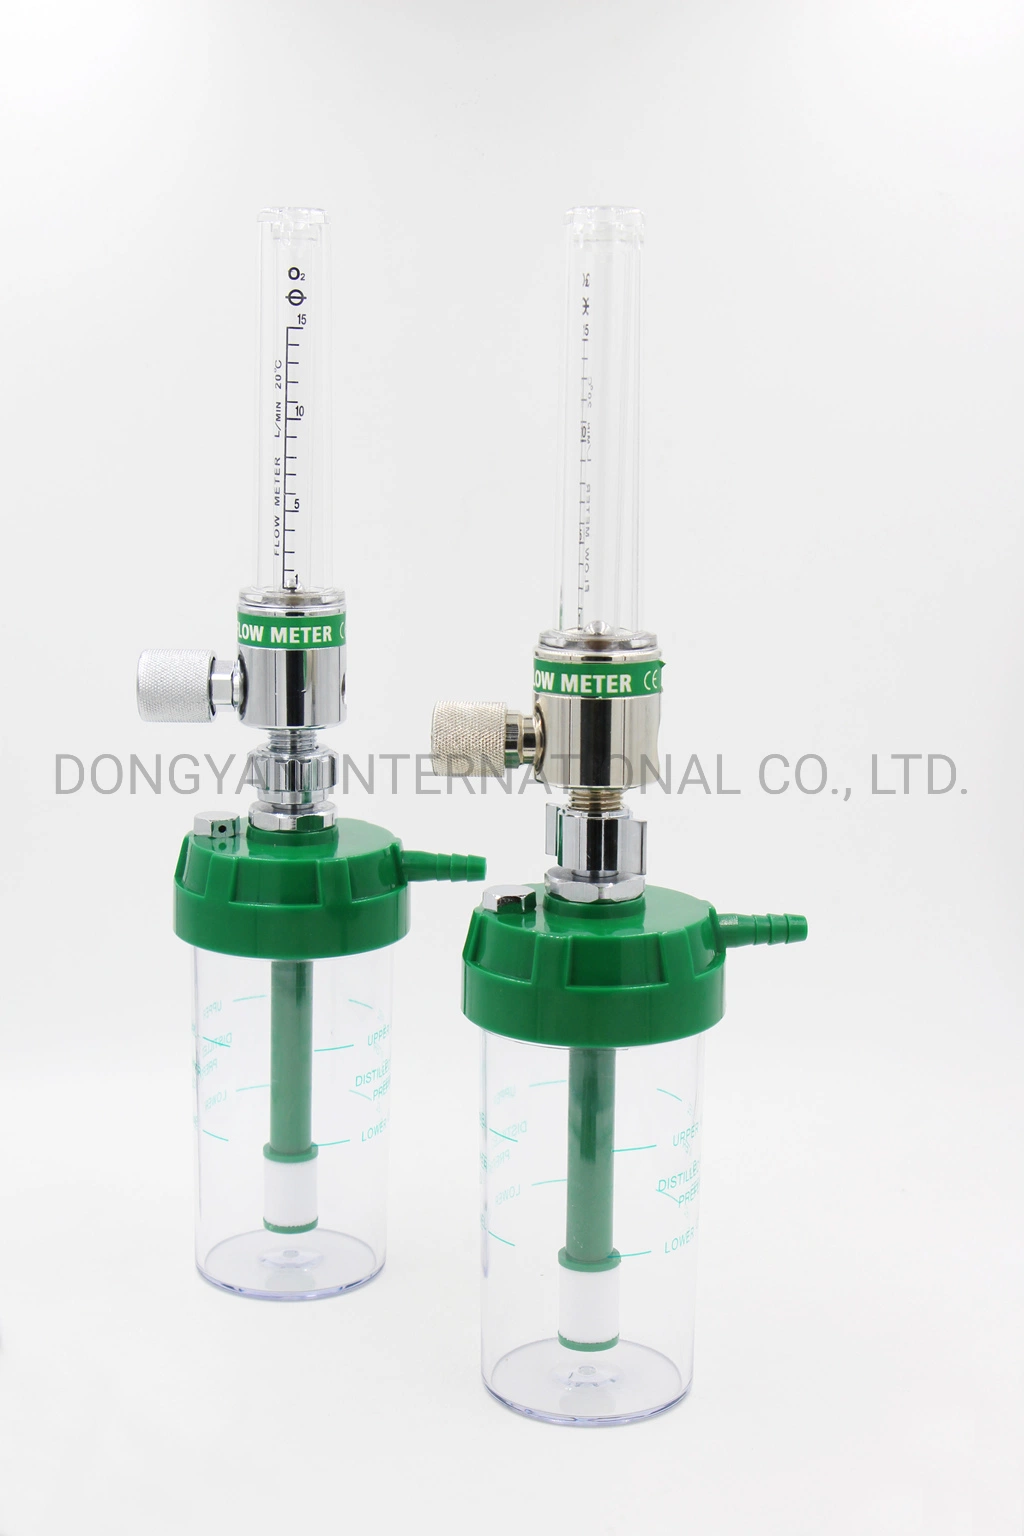 Oxygen Flowmeter Regulator with Humidifier Bottle